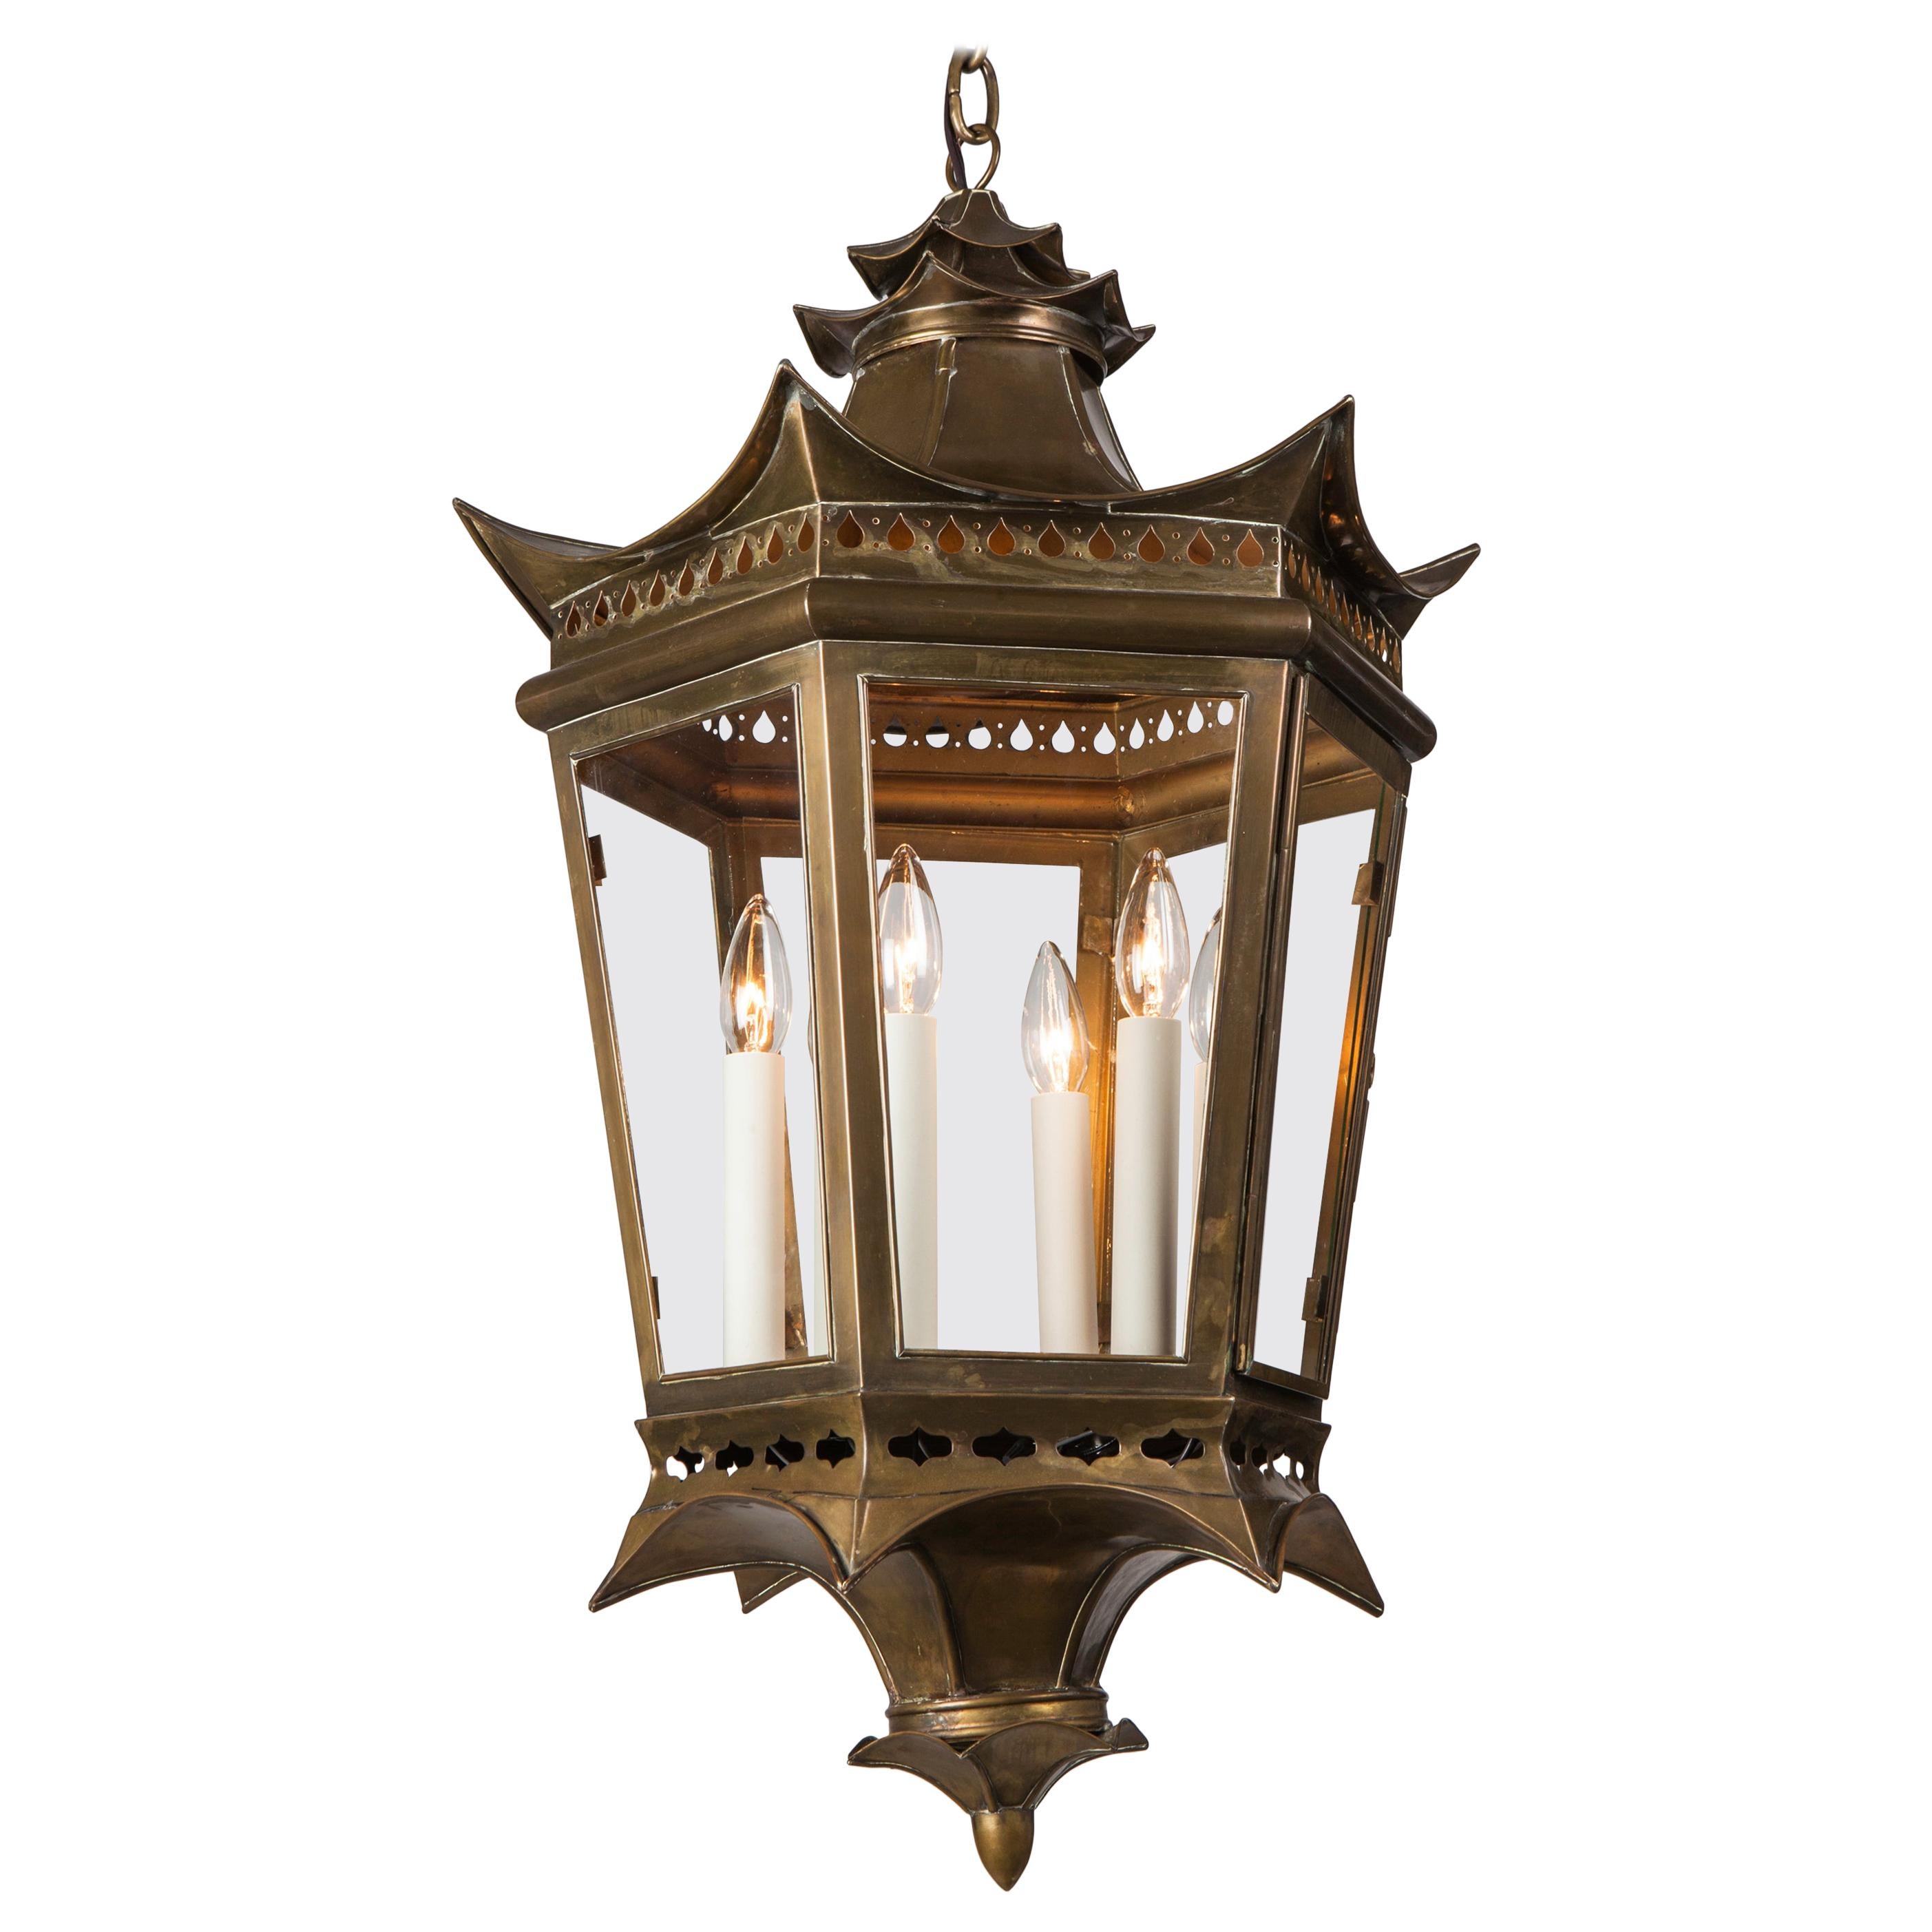 Vintage Hexagonal Pagoda Form Brass Lantern with Pierced Details, Circa 1940s For Sale